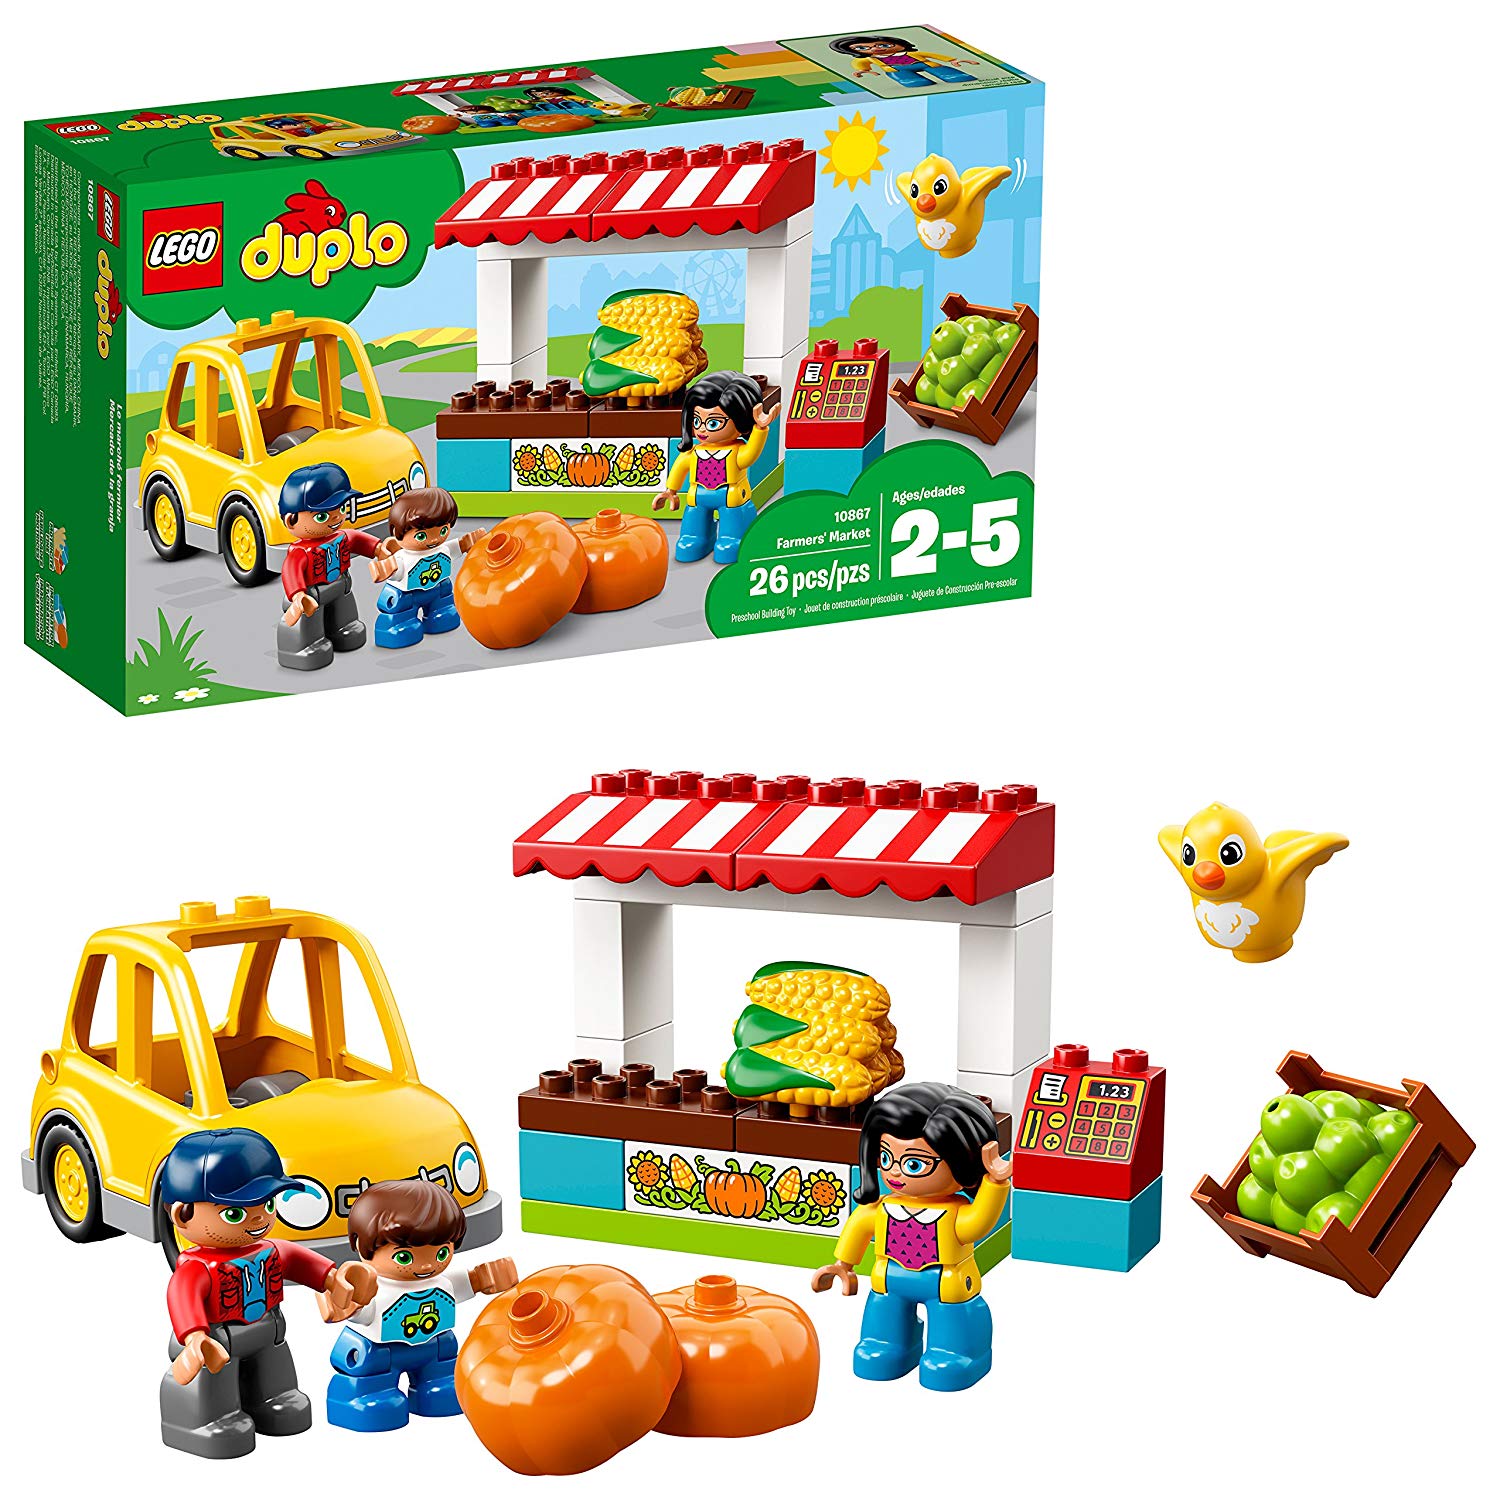 LEGO DUPLO Town Farmers’ Market 10867 Building Blocks $11.99  (REG $19.99)